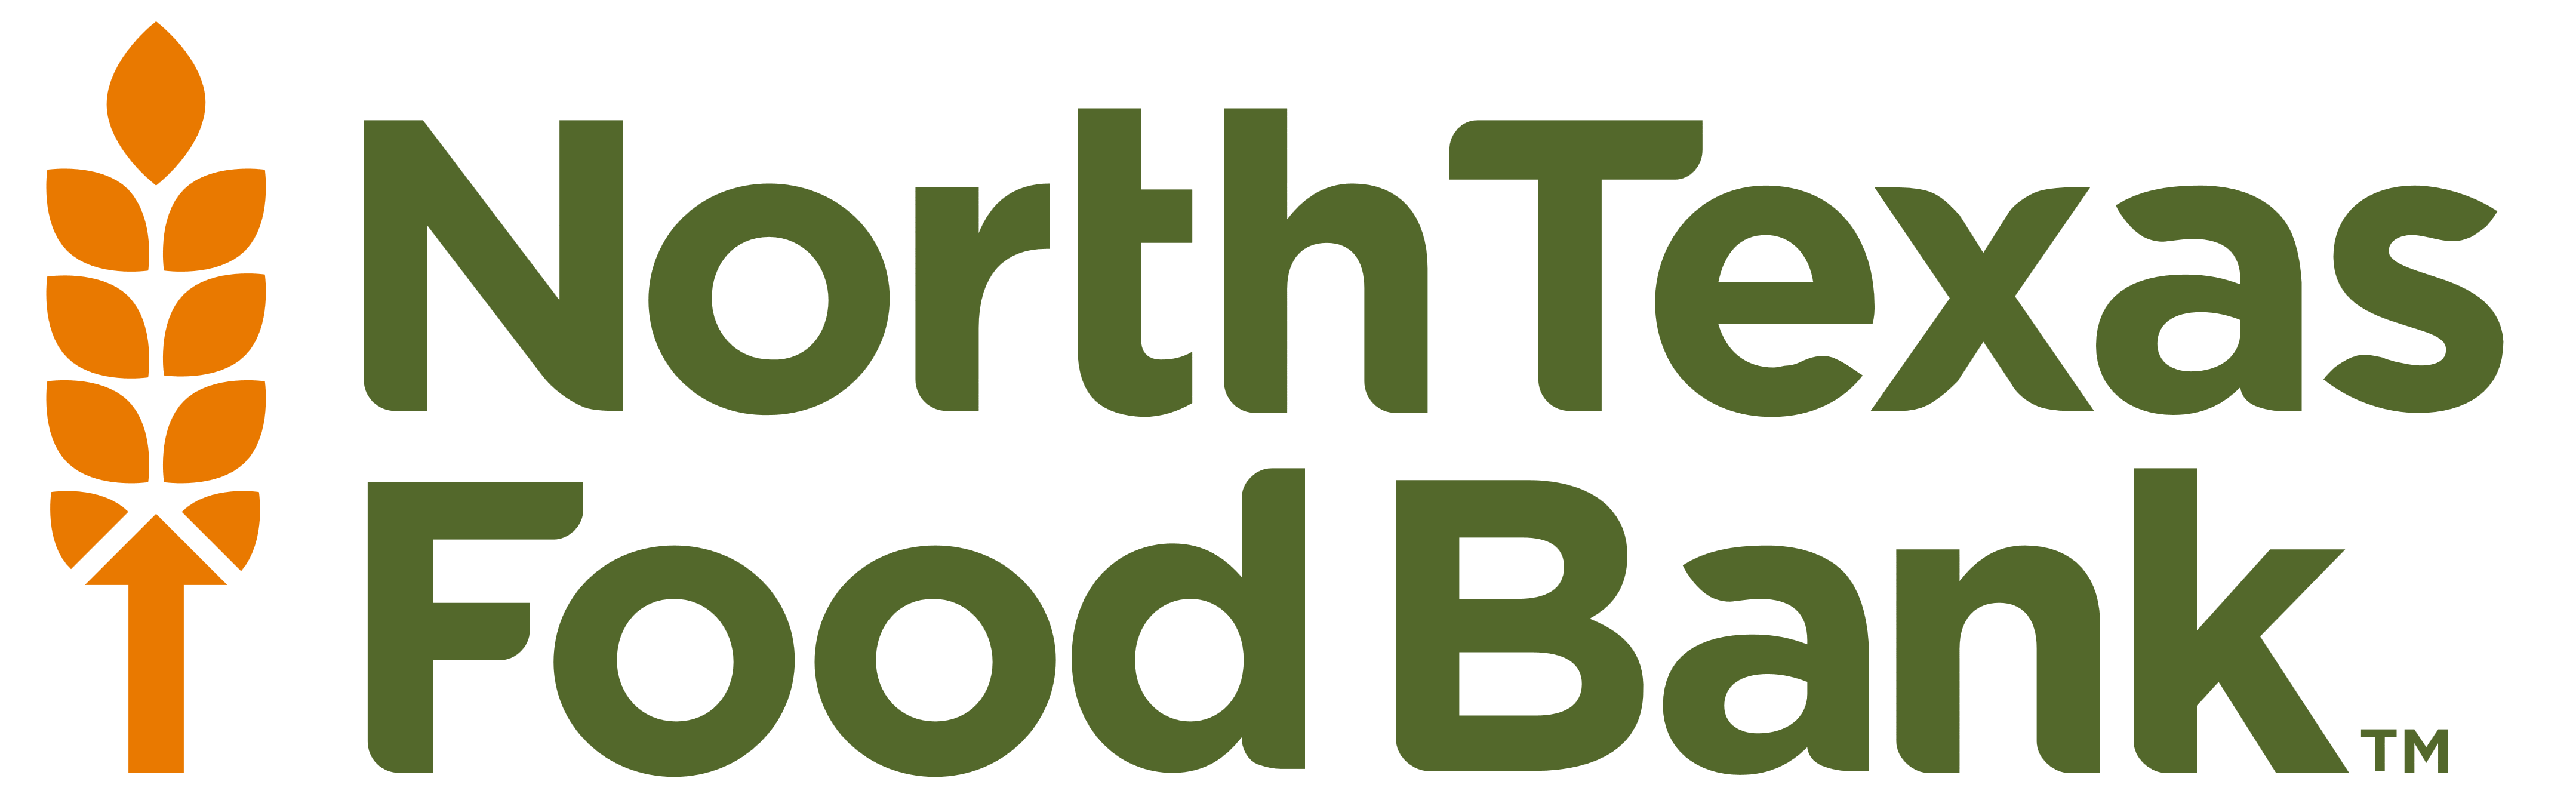 North Texas Food Bank logo, logotype